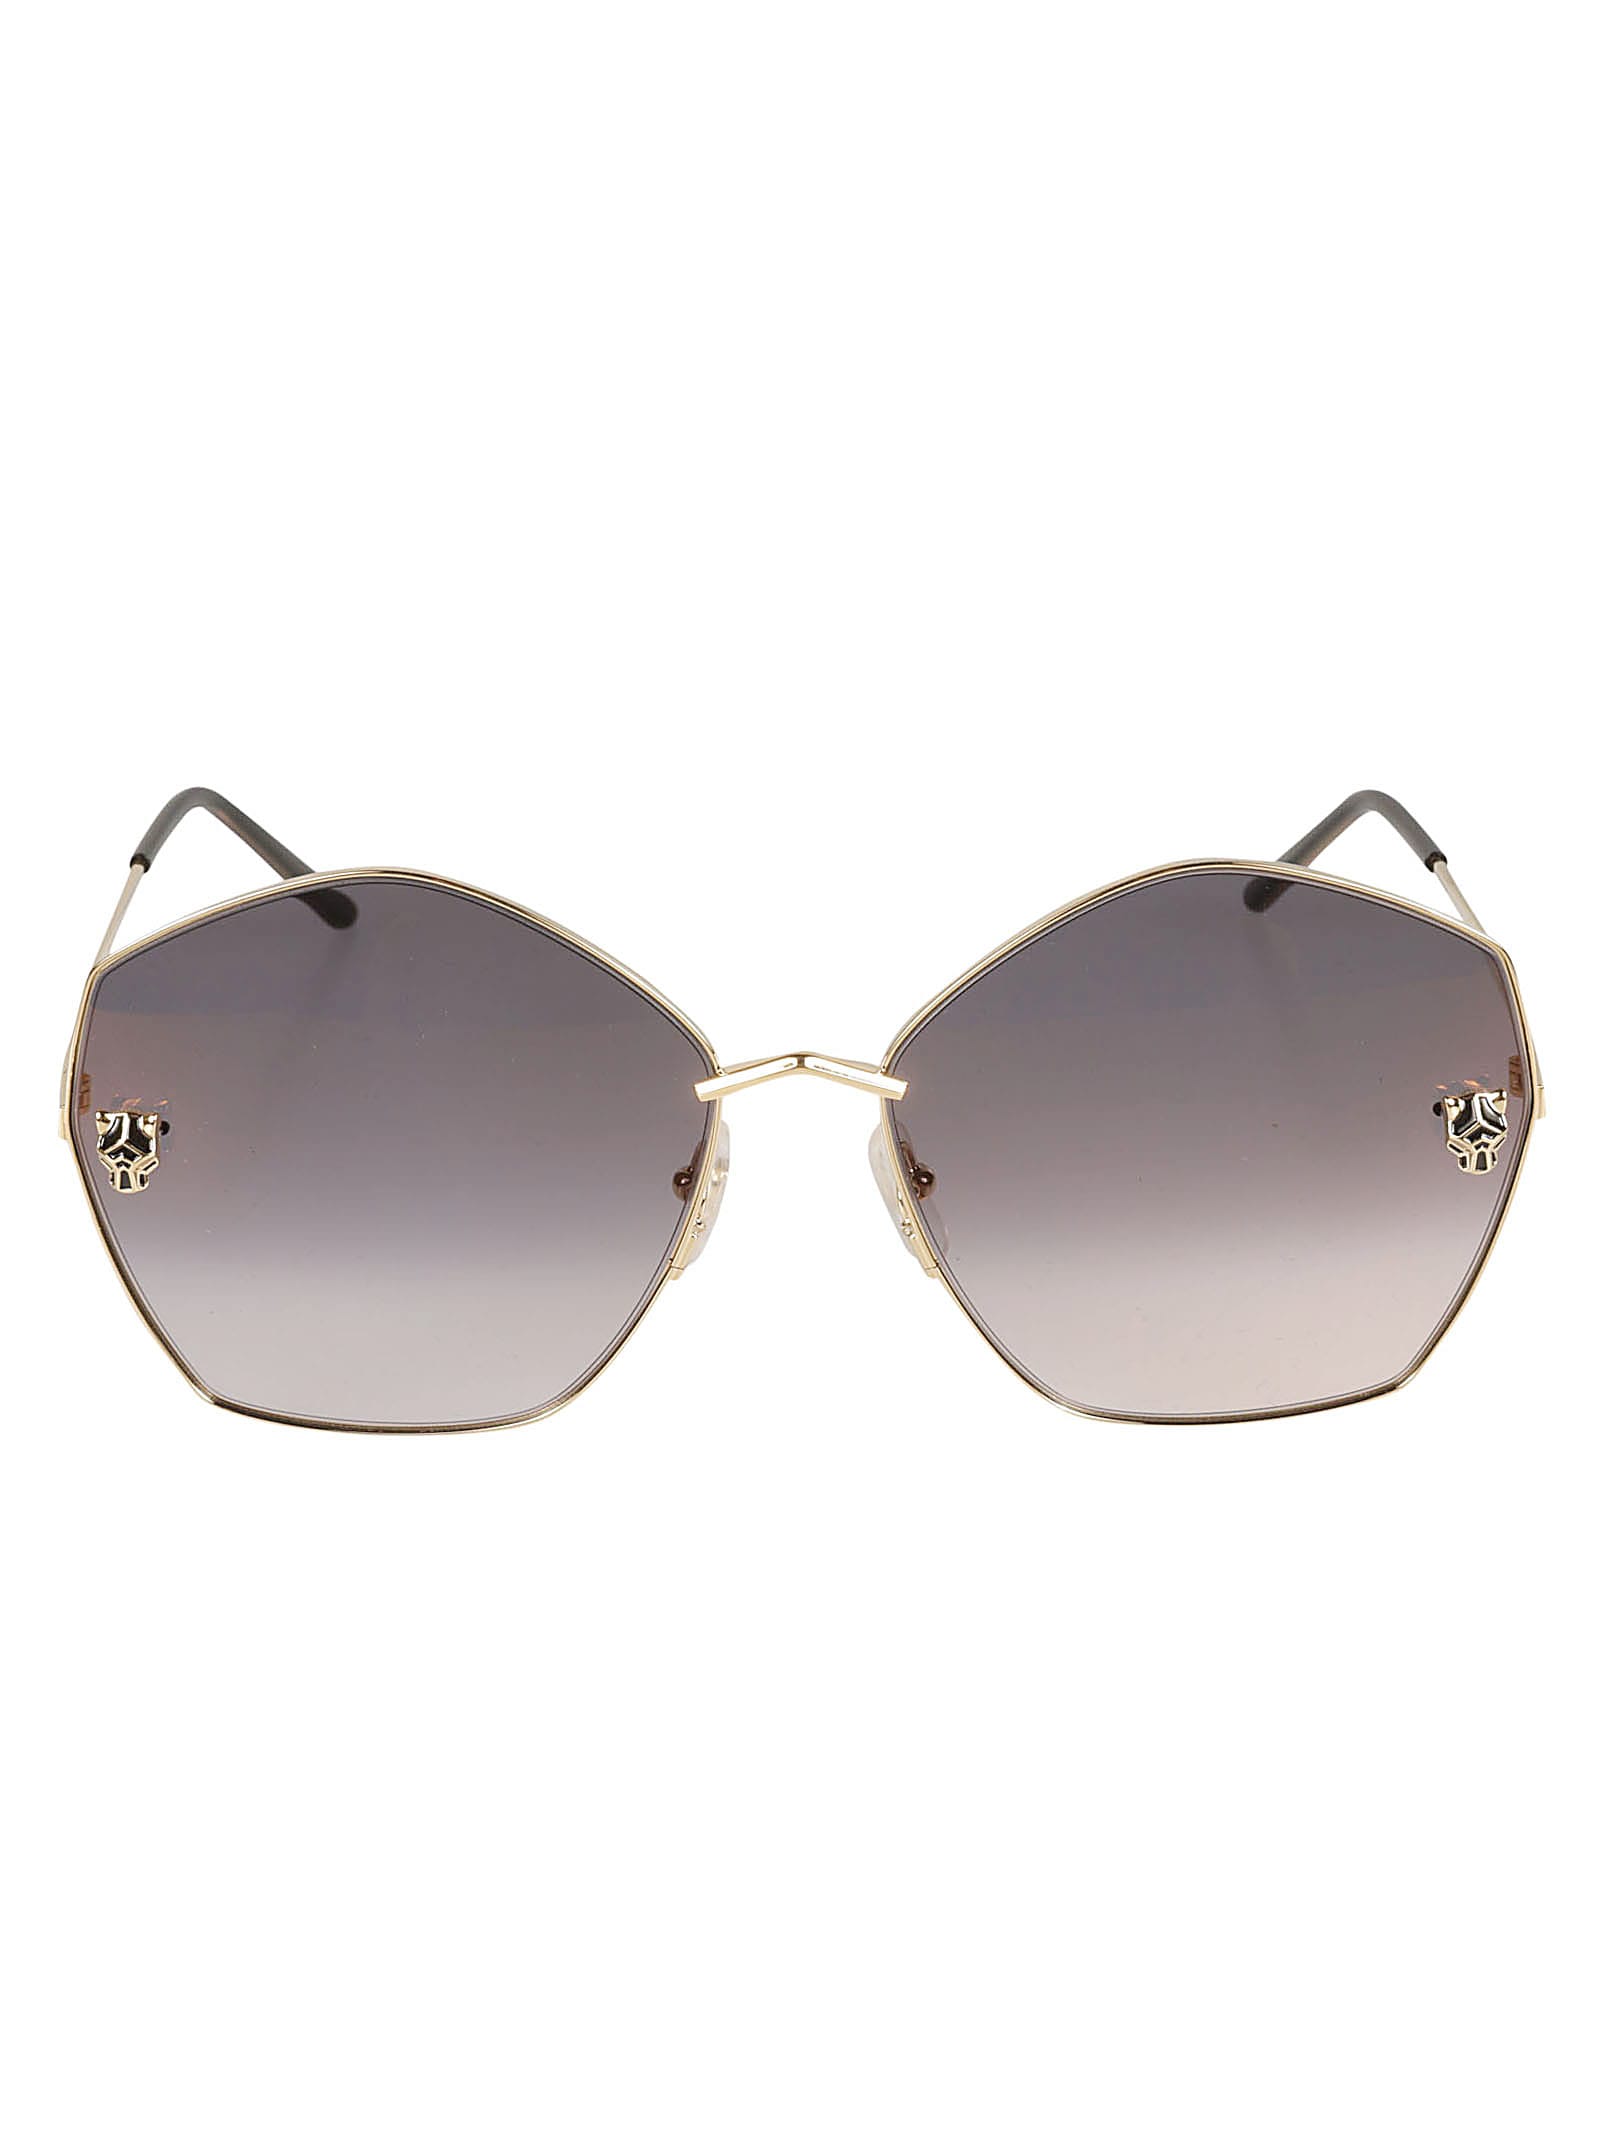 Cartier Hexagon Sunglasses In Gold/grey